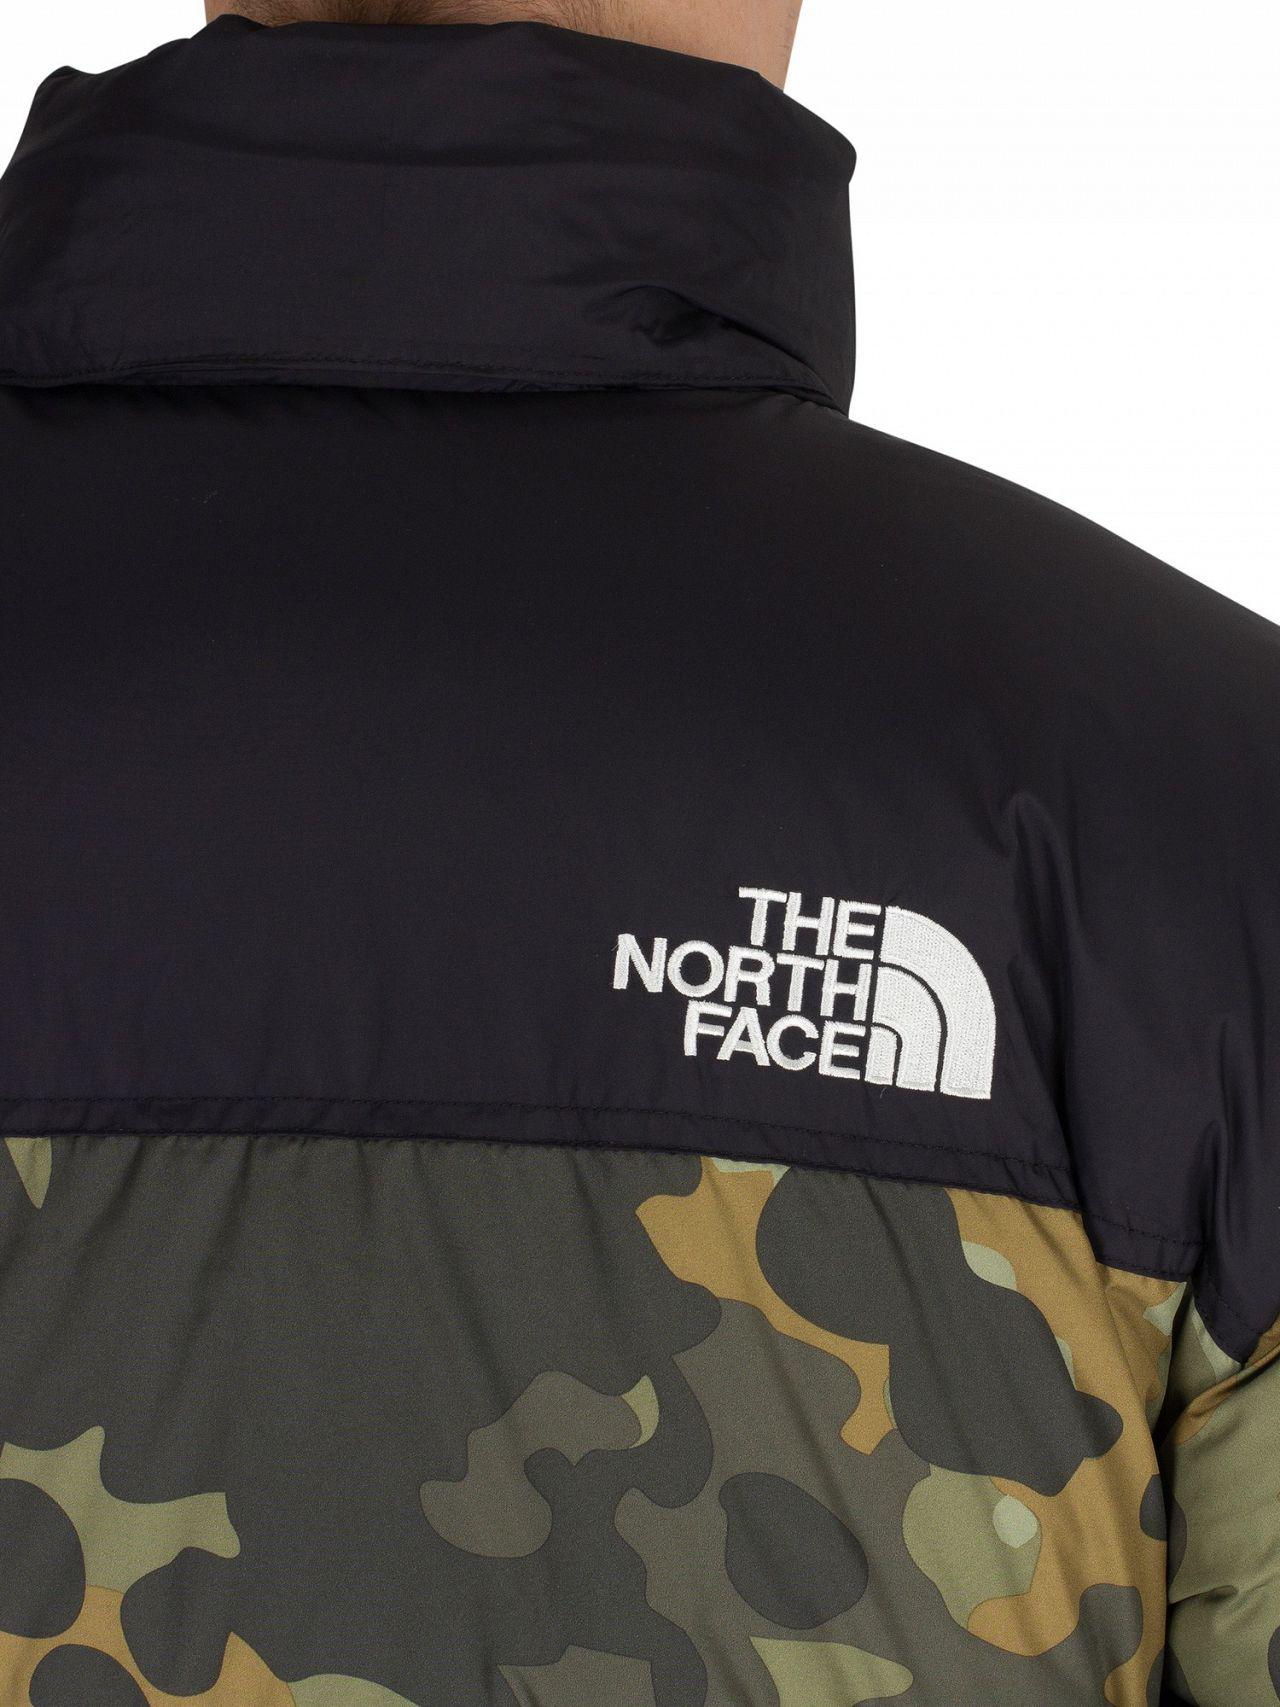 The North Face Synthetic 1996 Camo Retro Nuptse Jacket Green for Men - Lyst